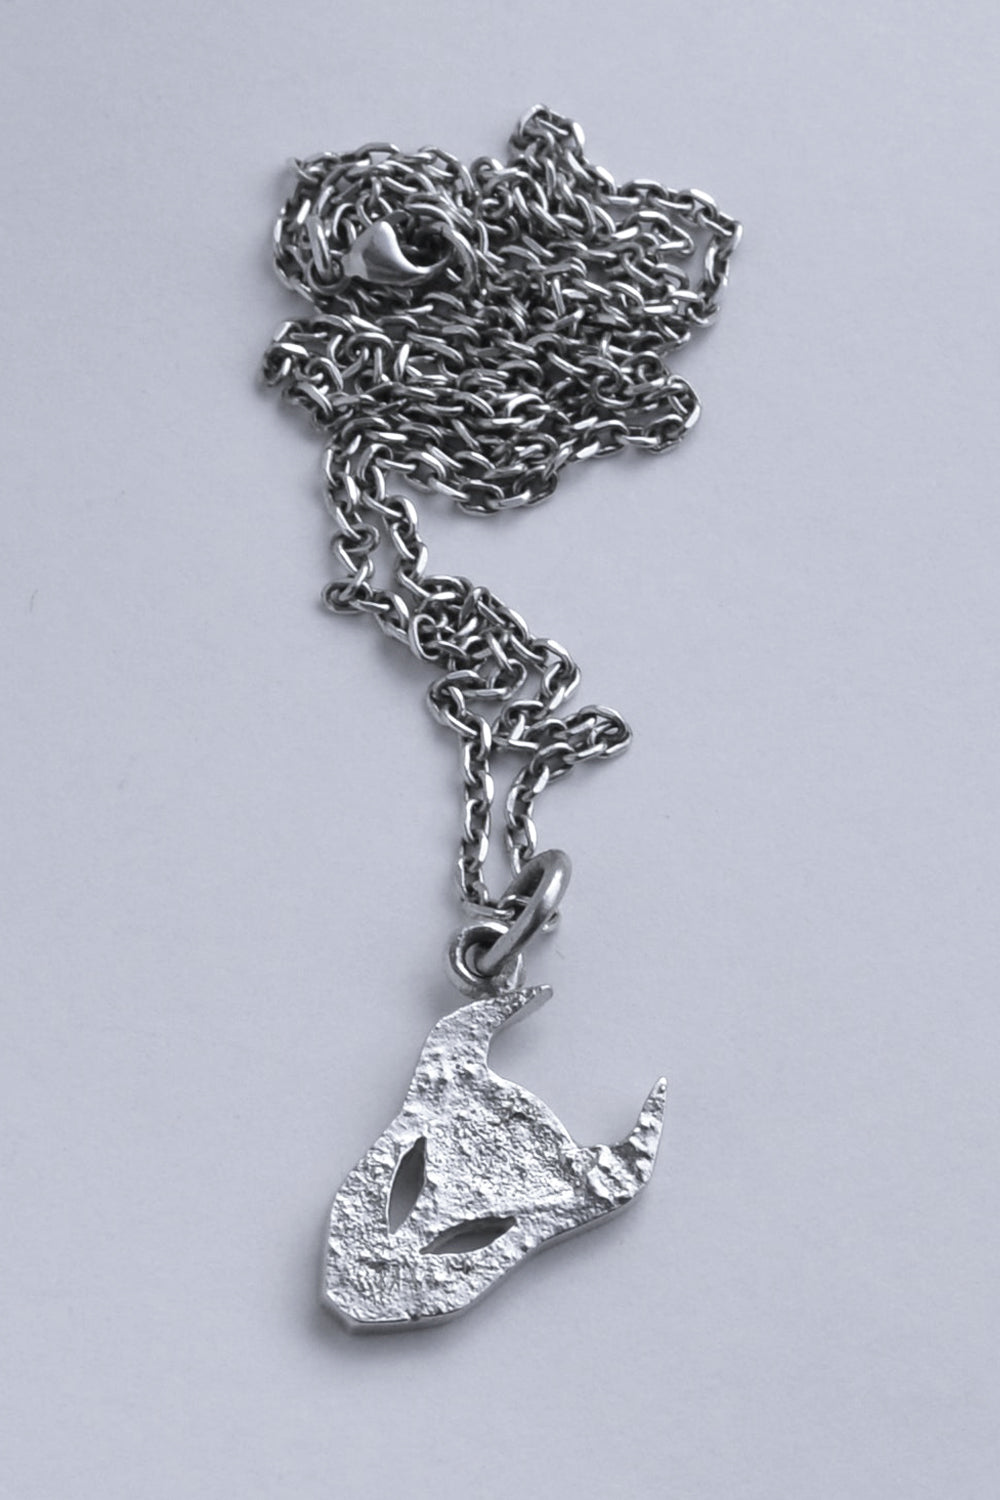 demon pendant in silver by Annika Burman